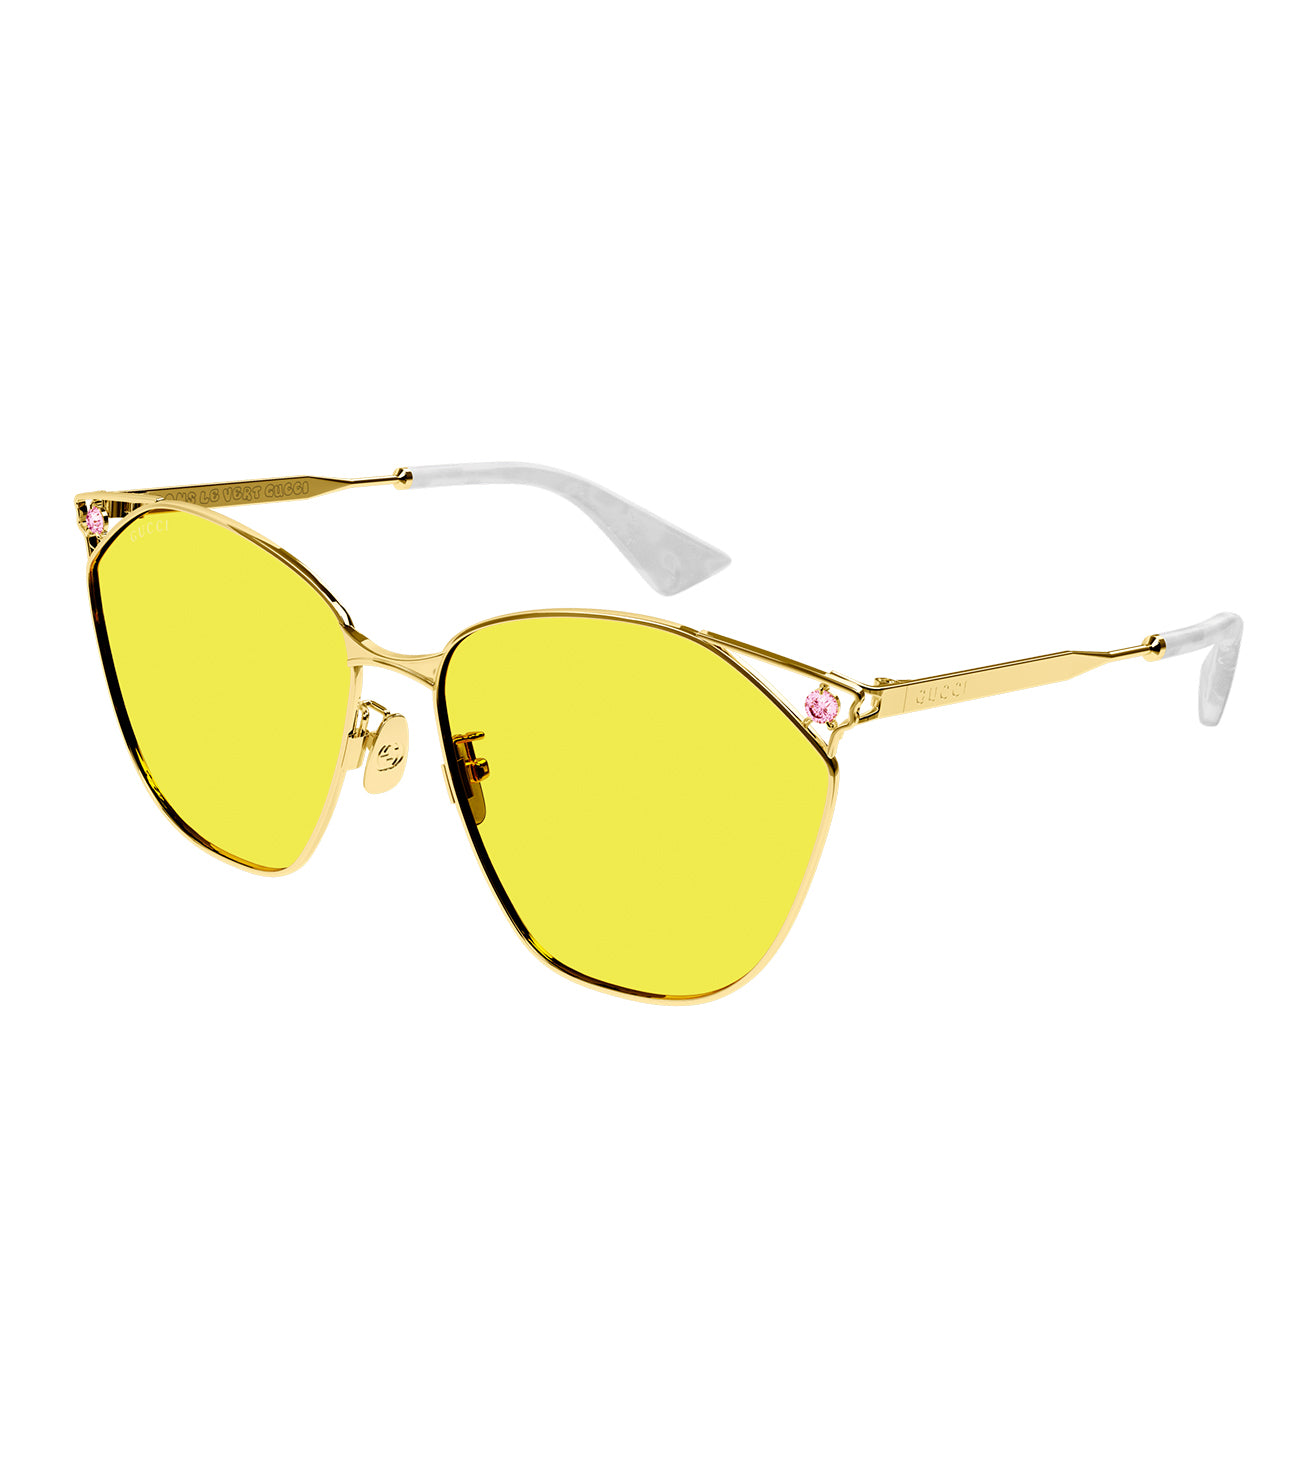 Gucci Women's Yellow Butterfly Sunglasses